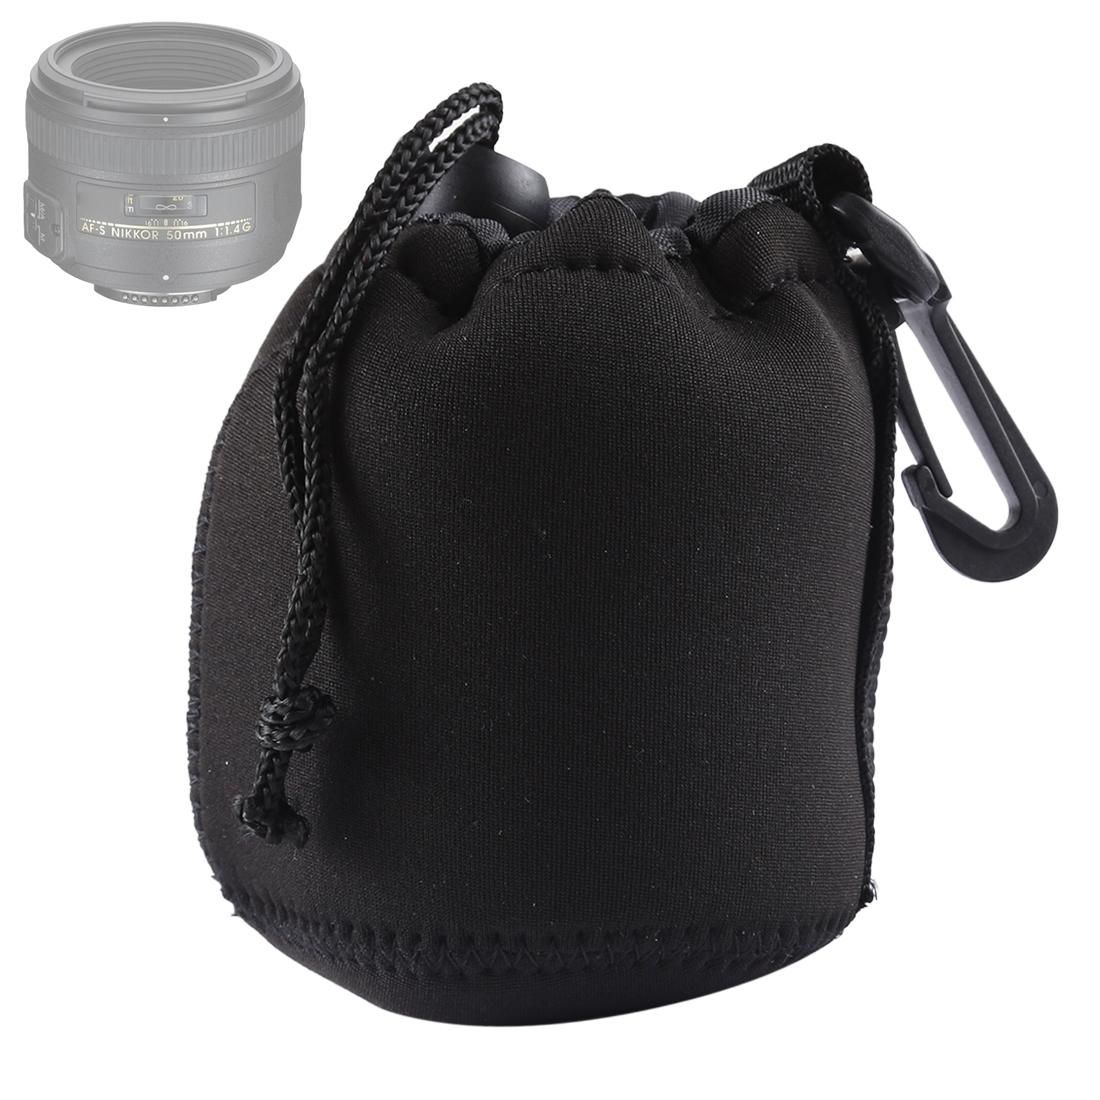 Neoprene SLR Camera Lens Carrying Bag Pouch Bag with Carabiner, Size: 8x10cm (Black)